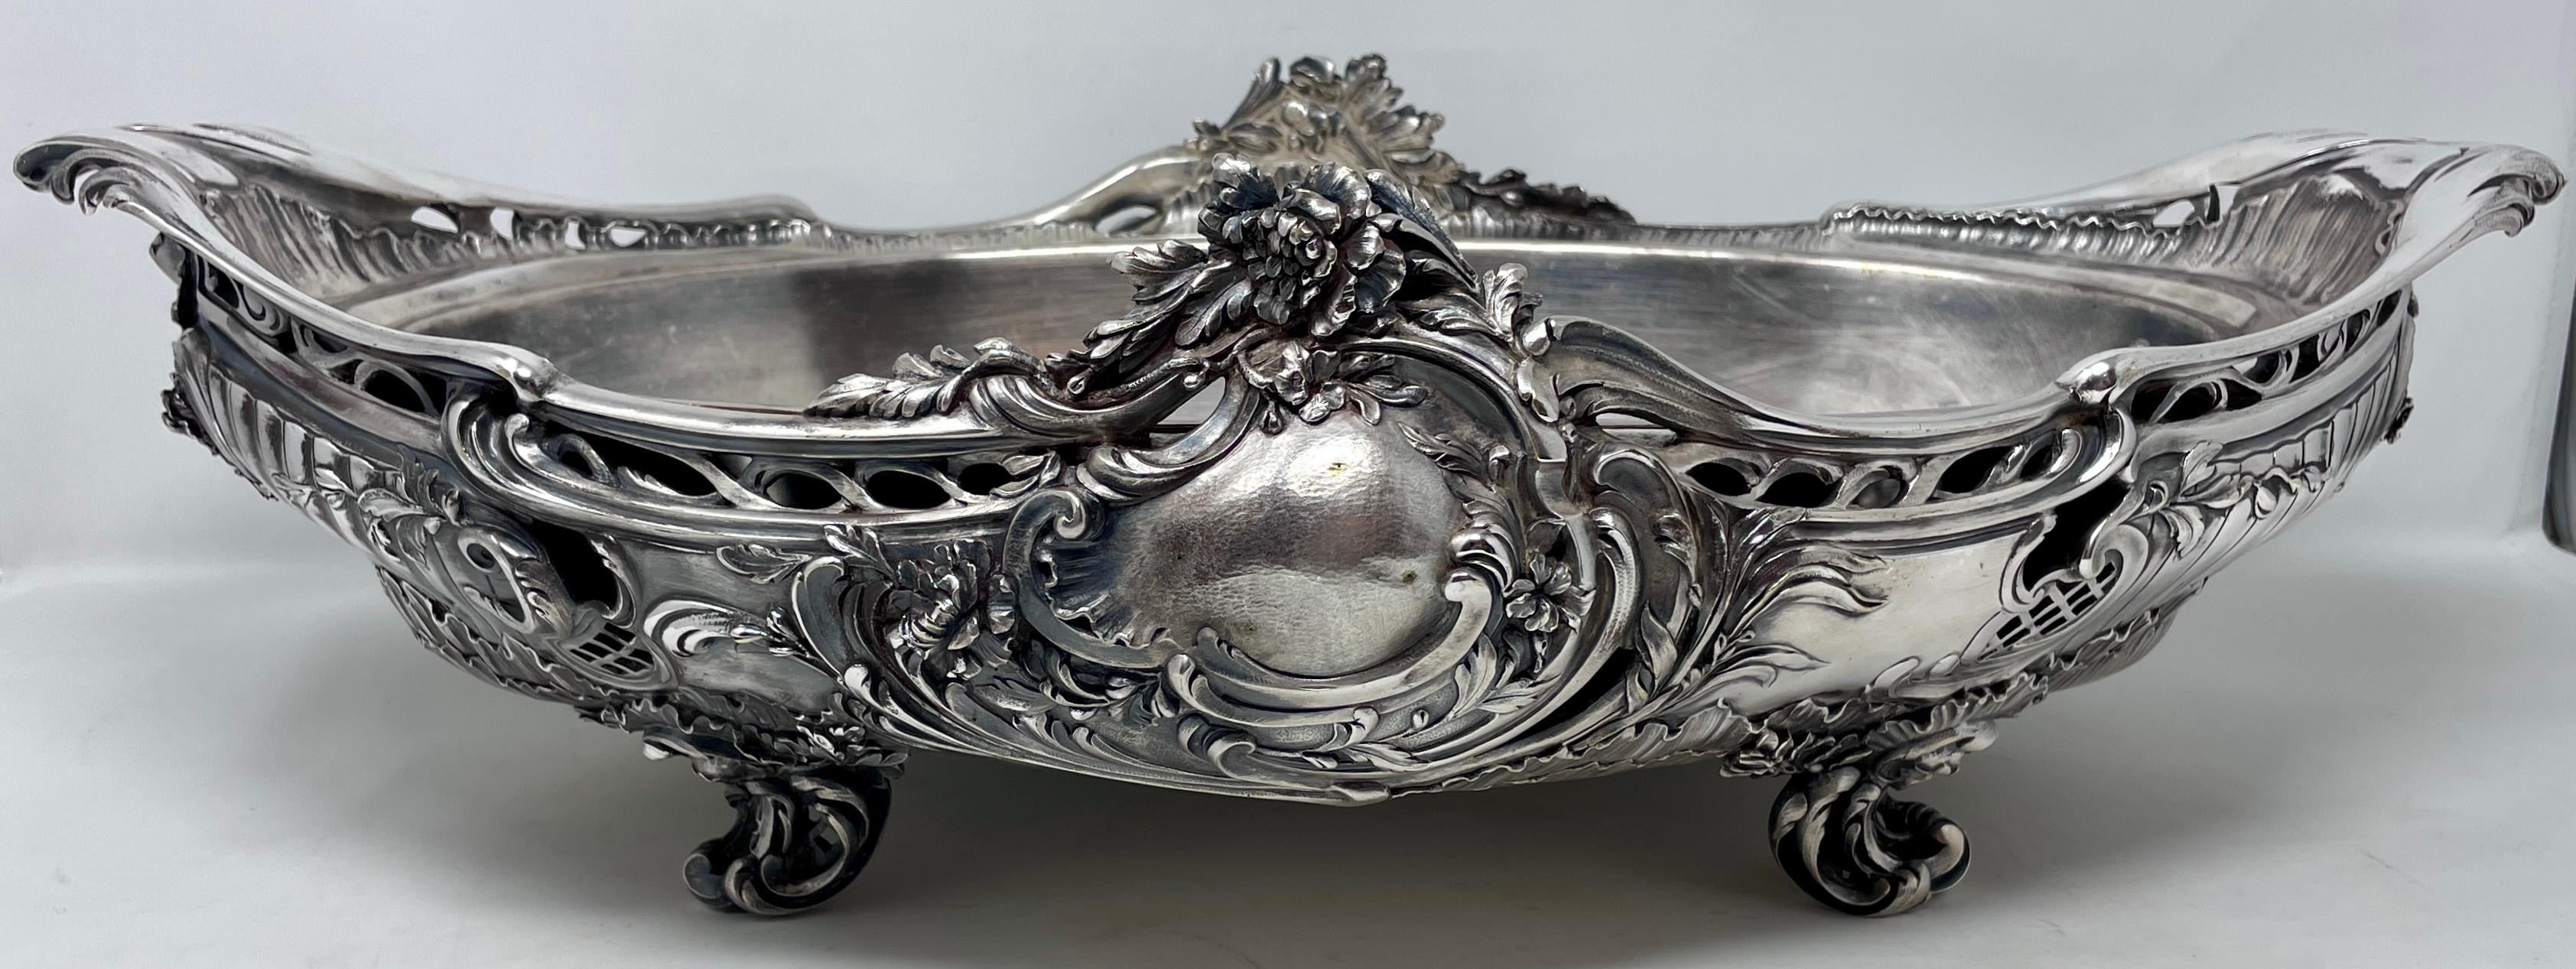 Antique French silvered bronze centerpiece, circa 1870.